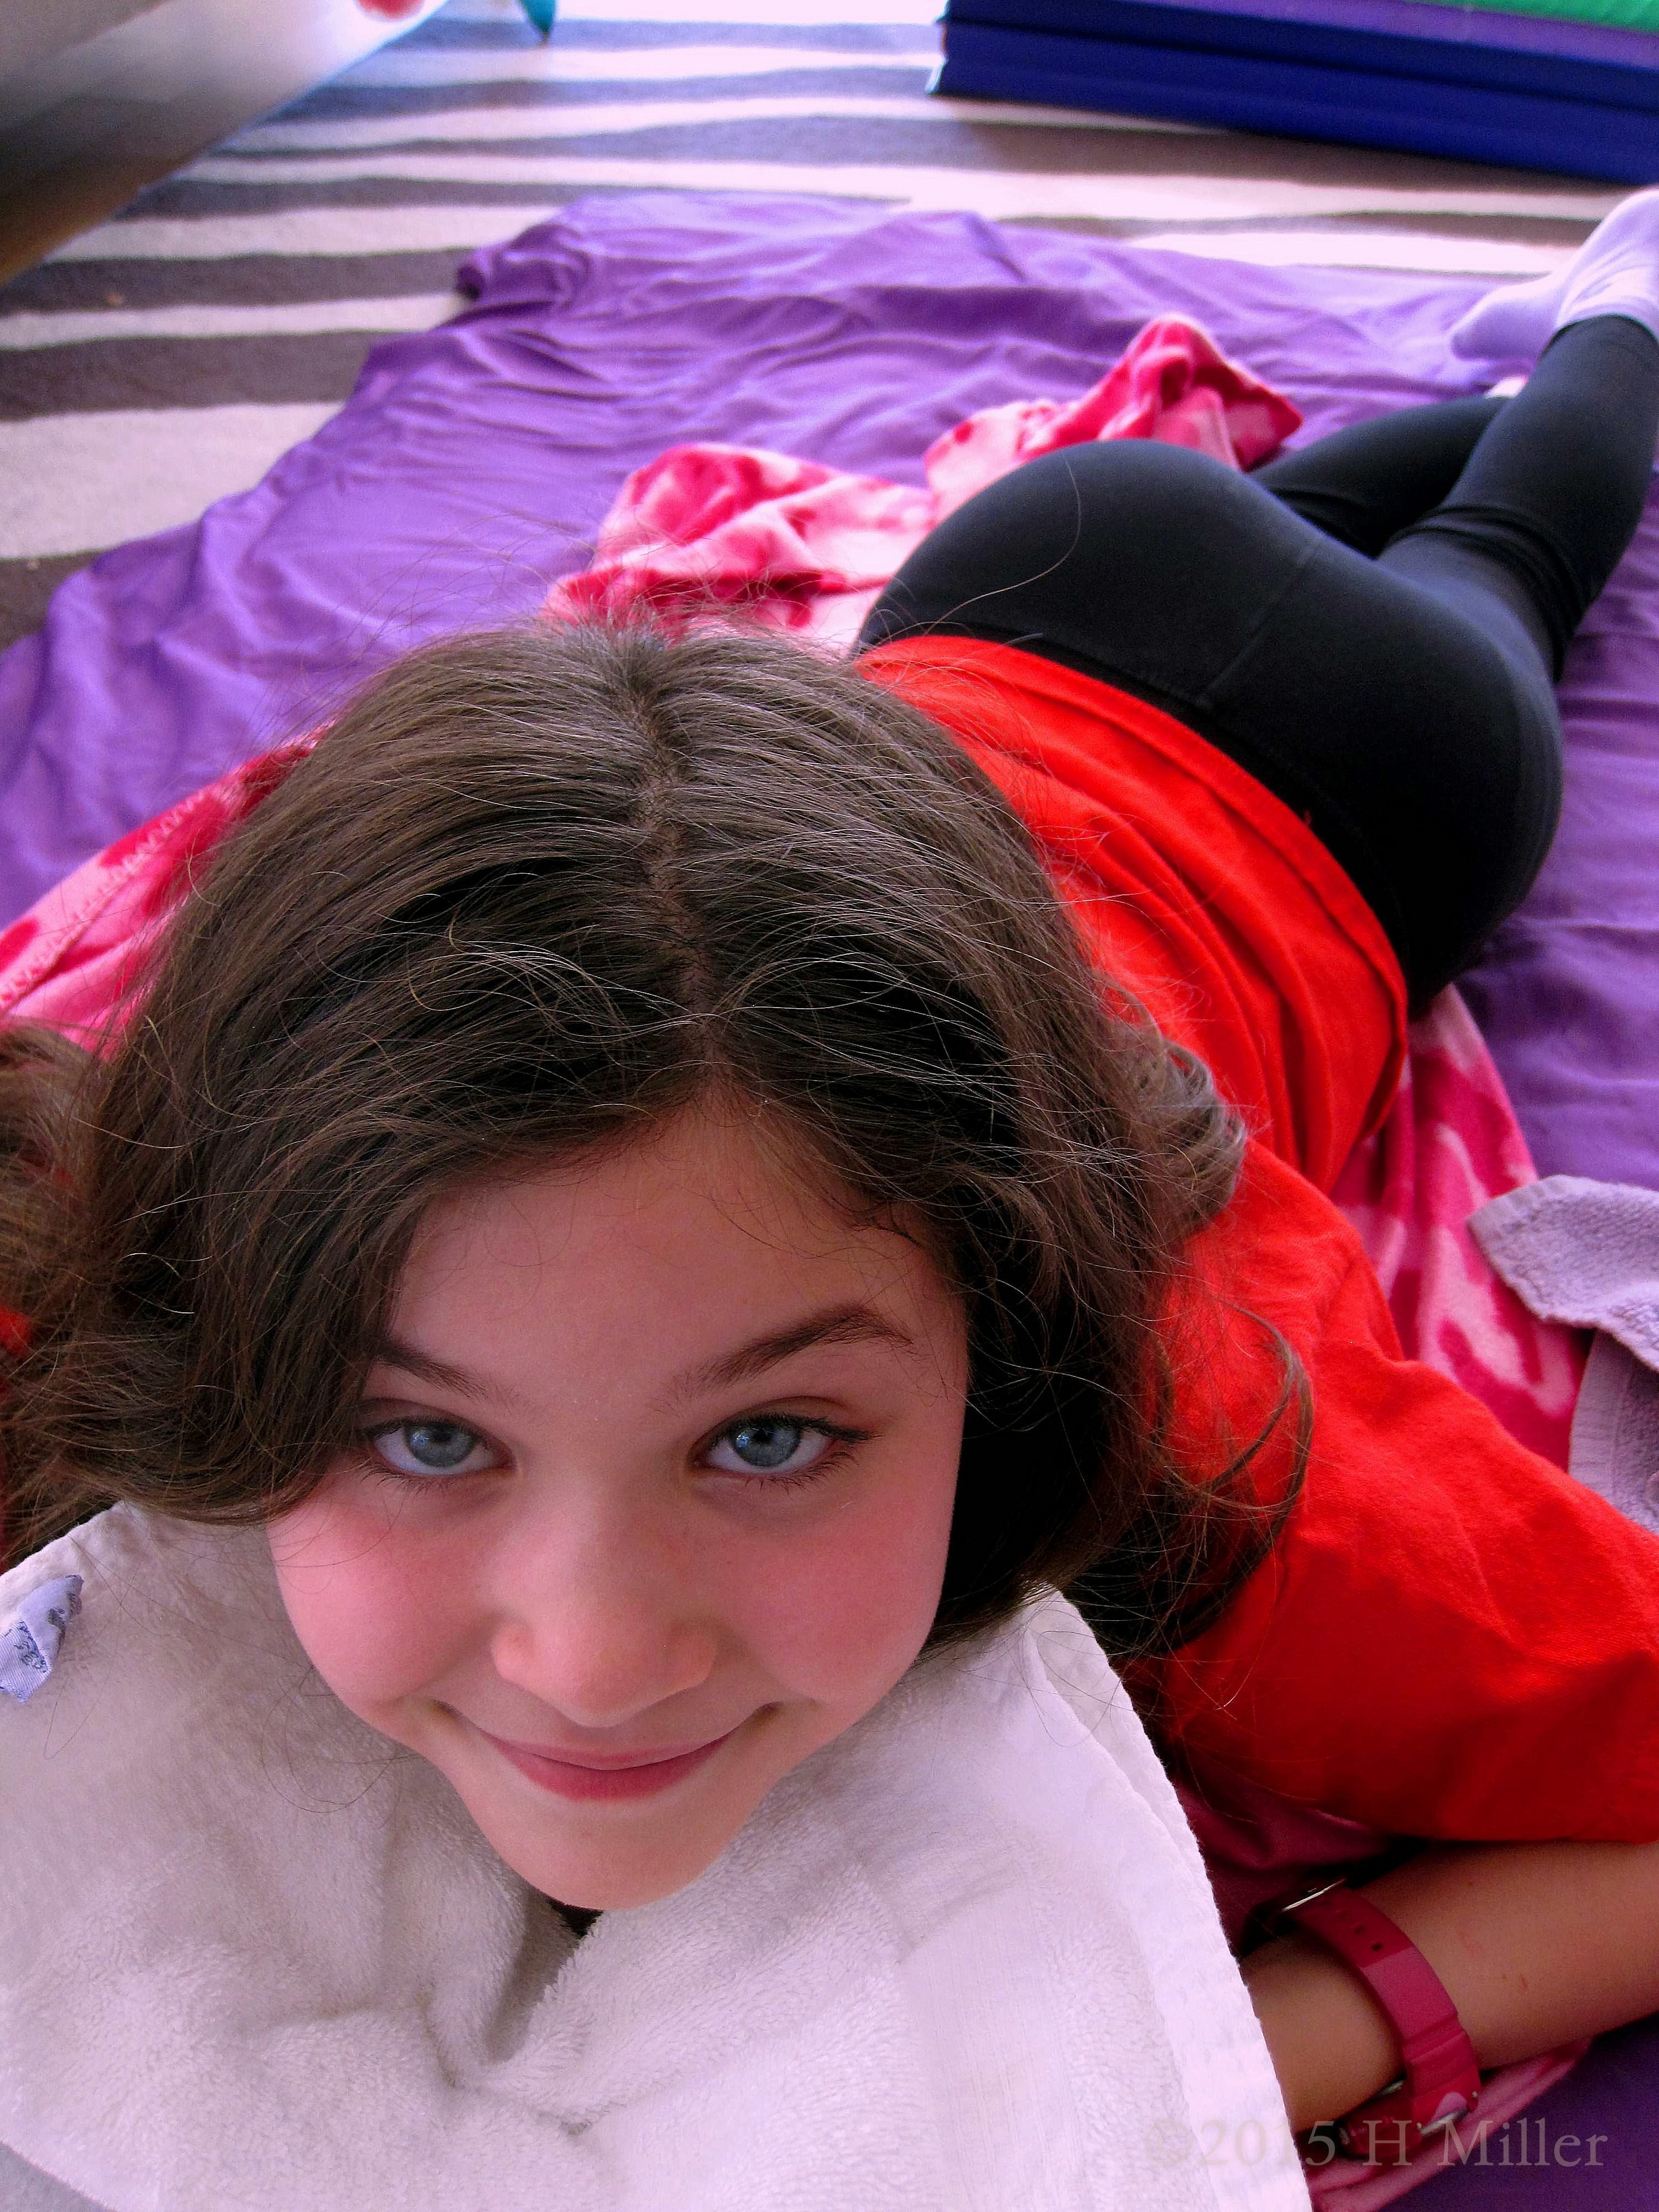 Kids Massage Helps Athletic Kids Who Do Sports, Dance, Or Gymnastics. 